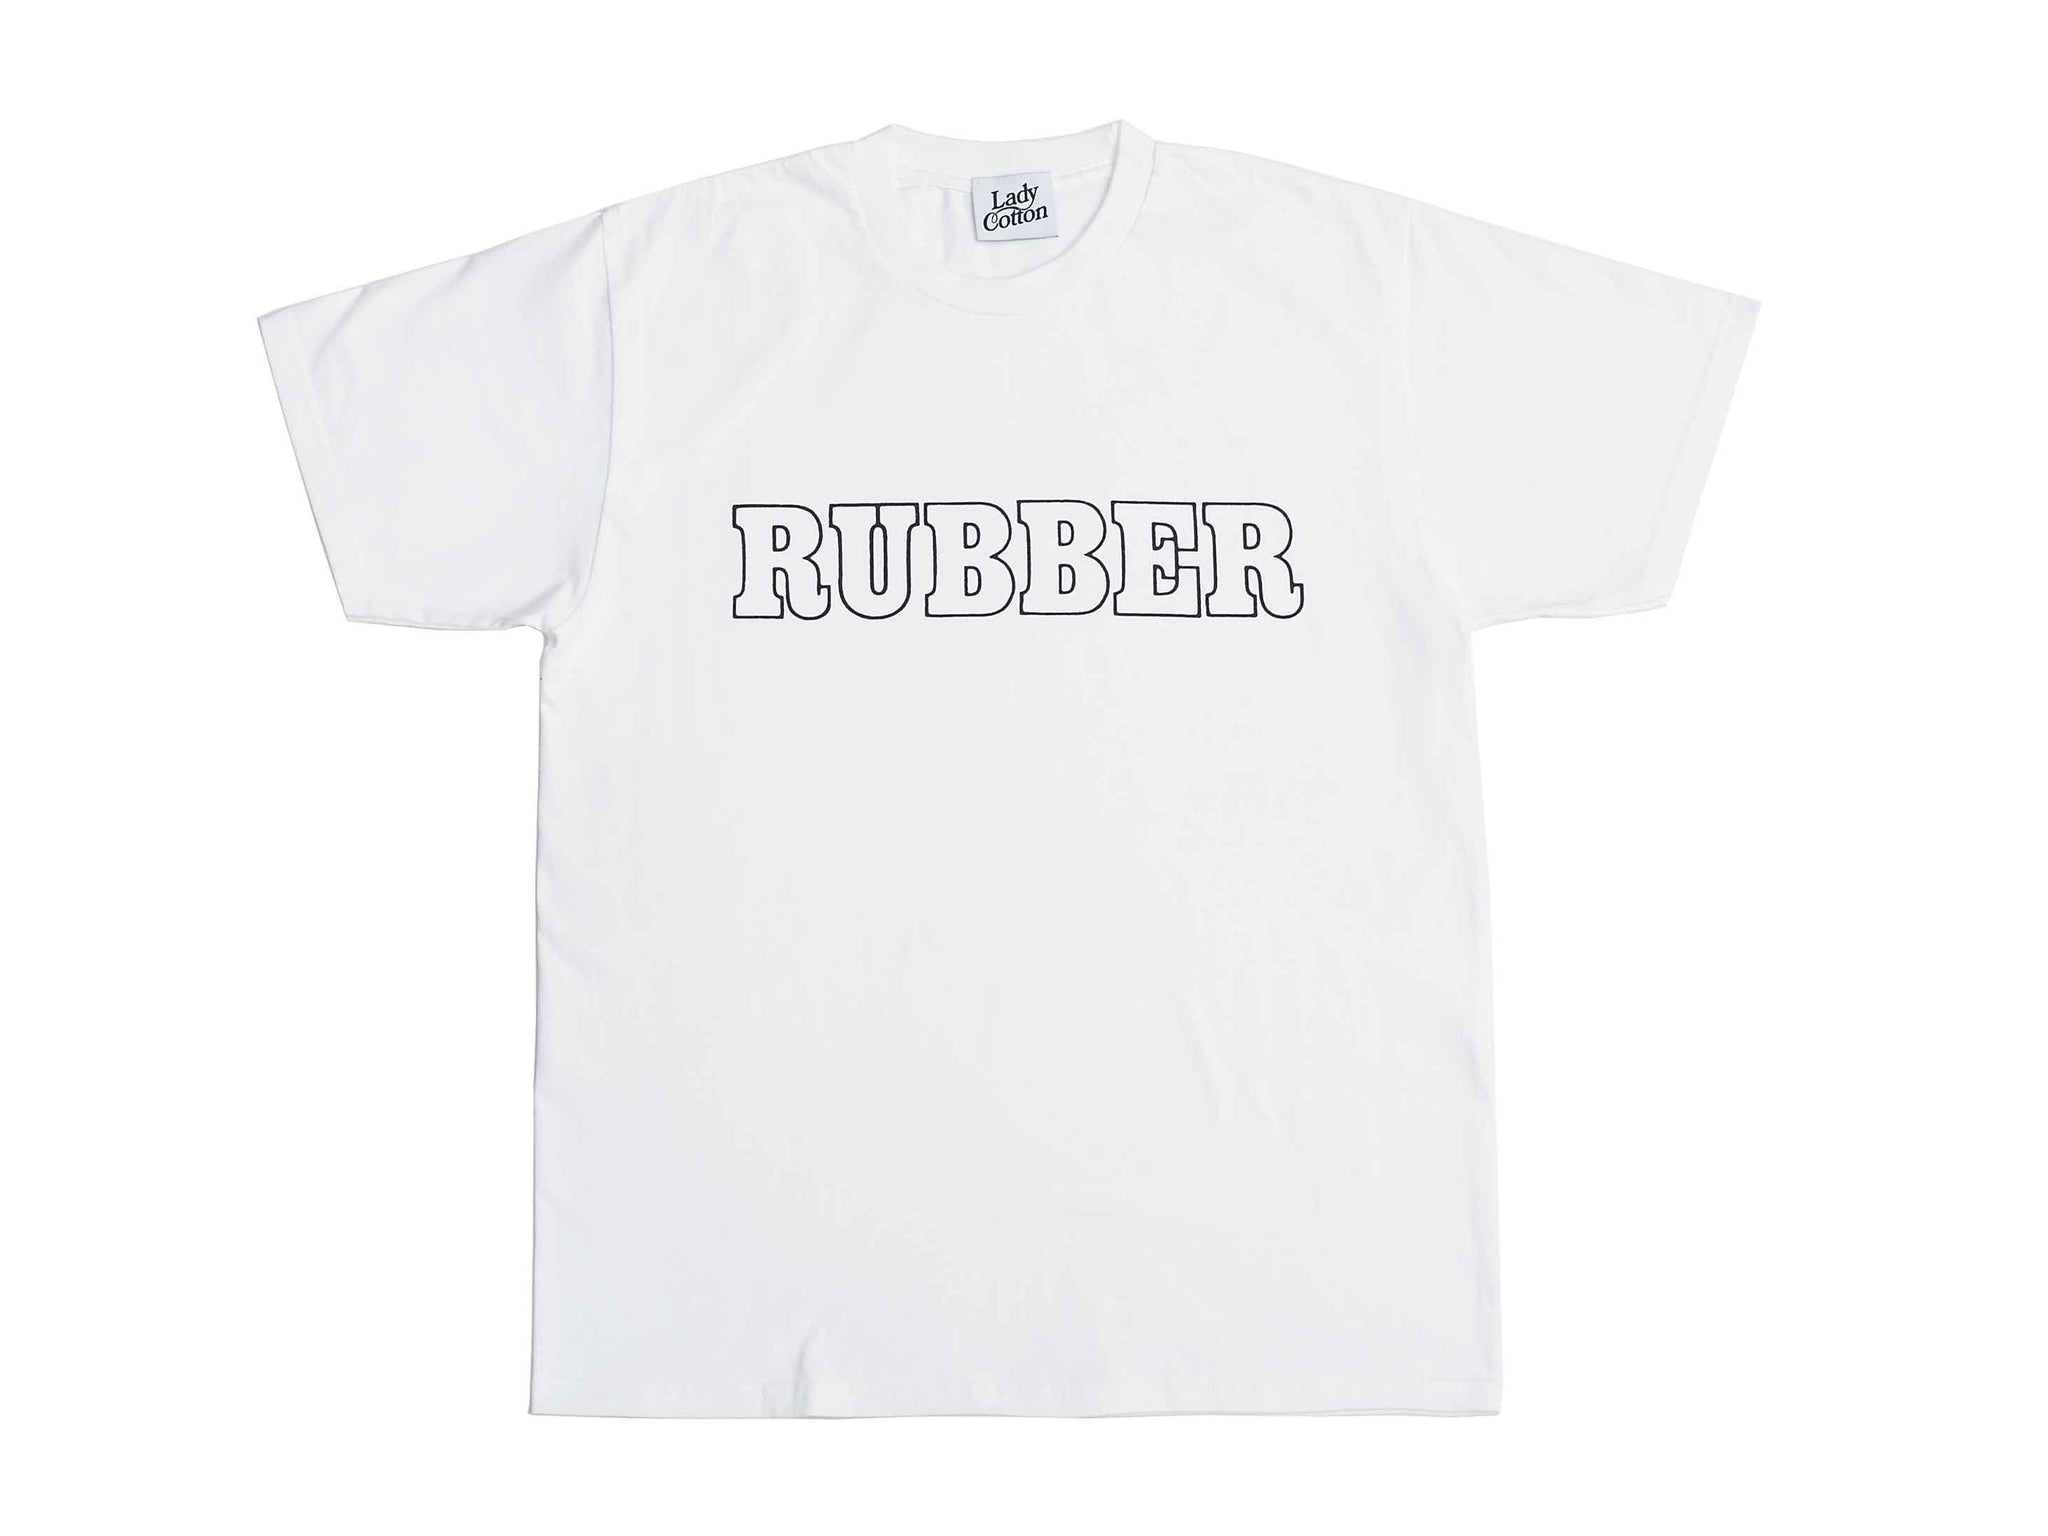 Rubber Short Sleeve